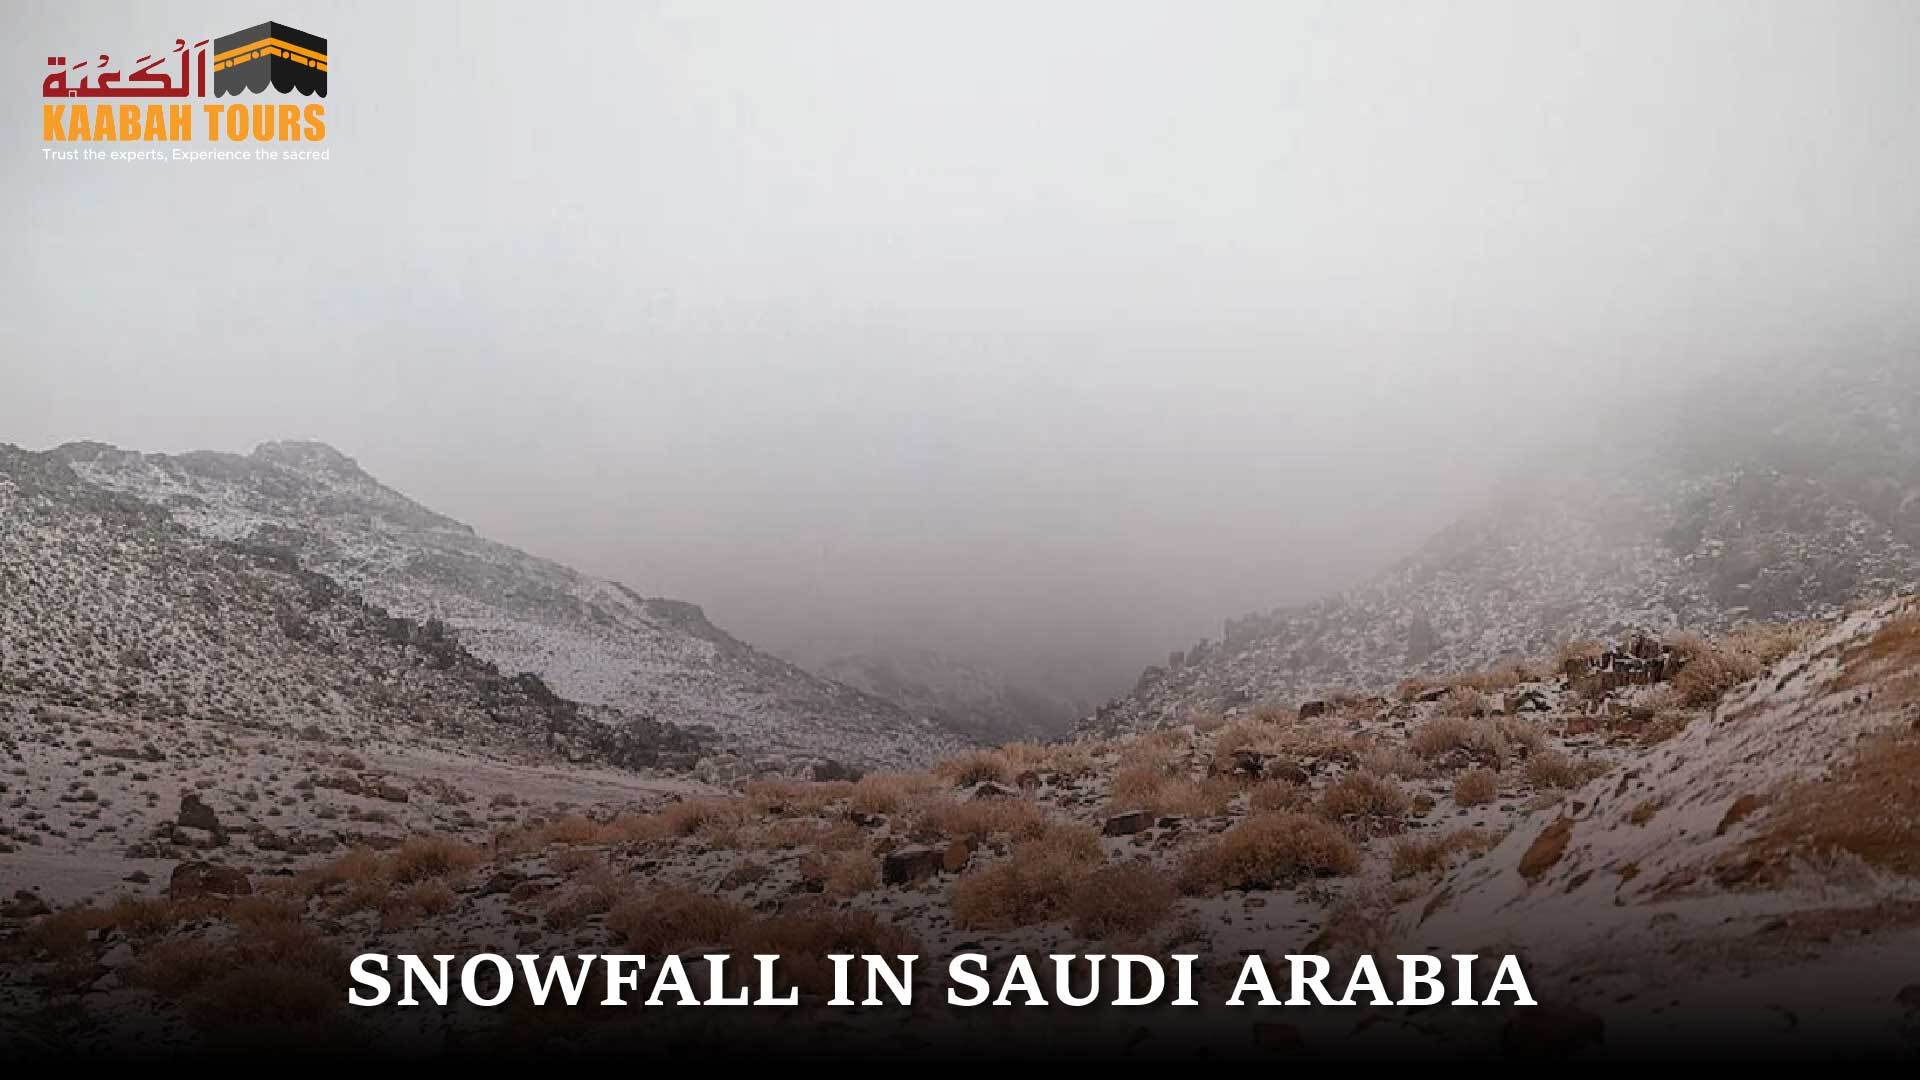 SNOWFALL IN SAUDI ARABIA